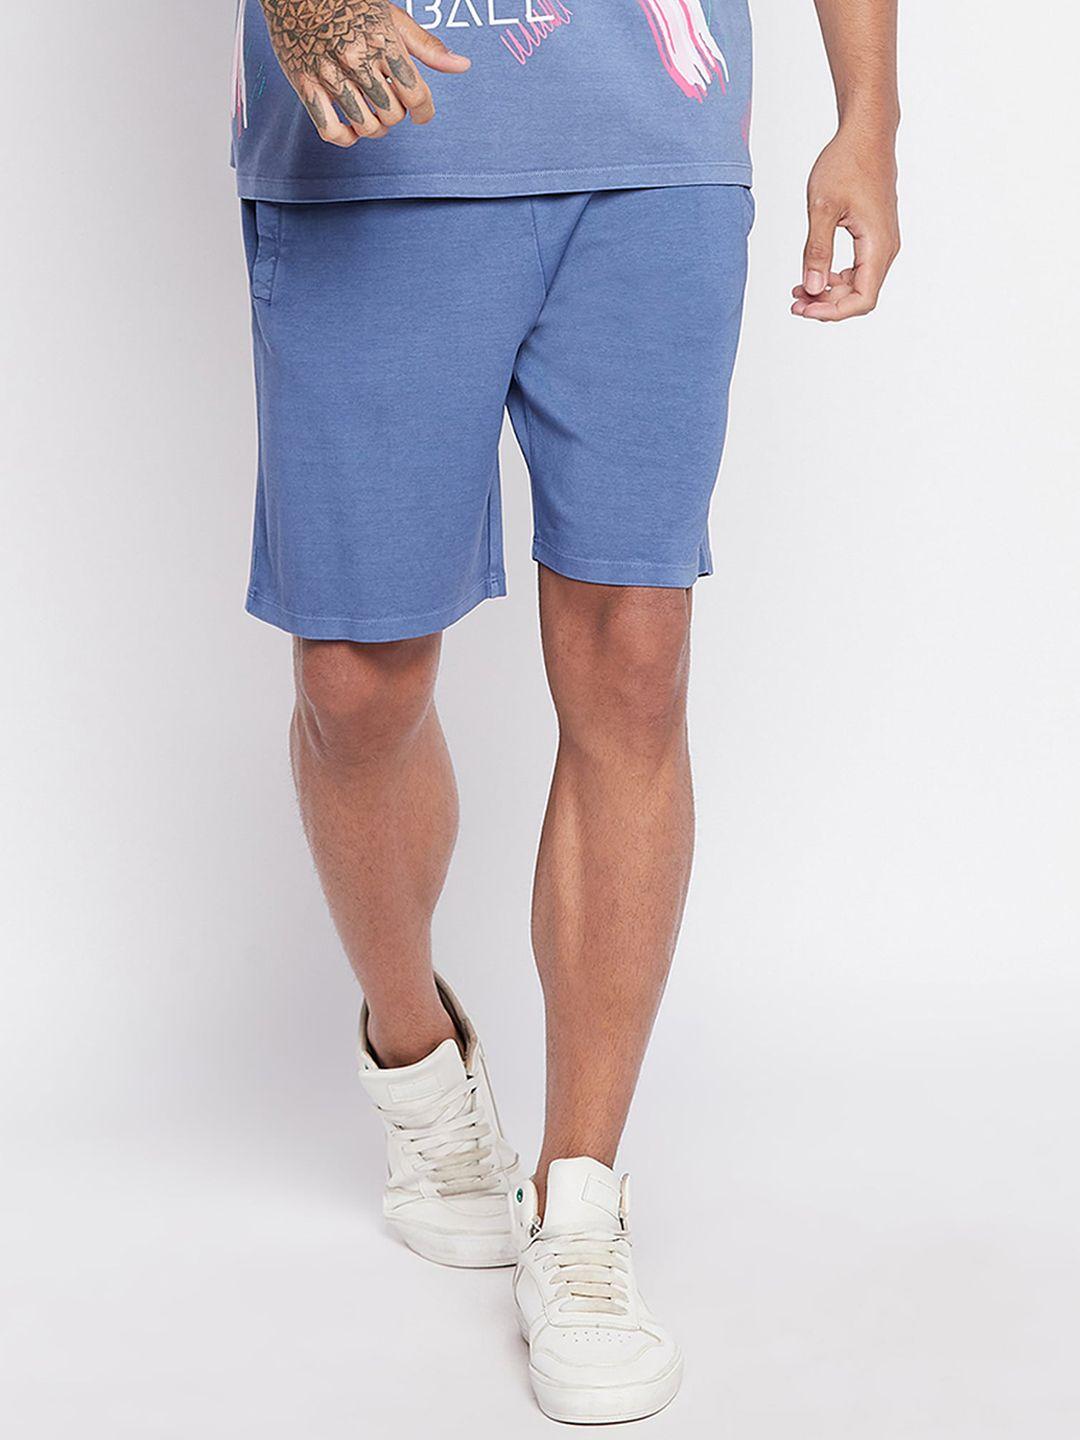 edrio-men-mid-rise-cotton-shorts